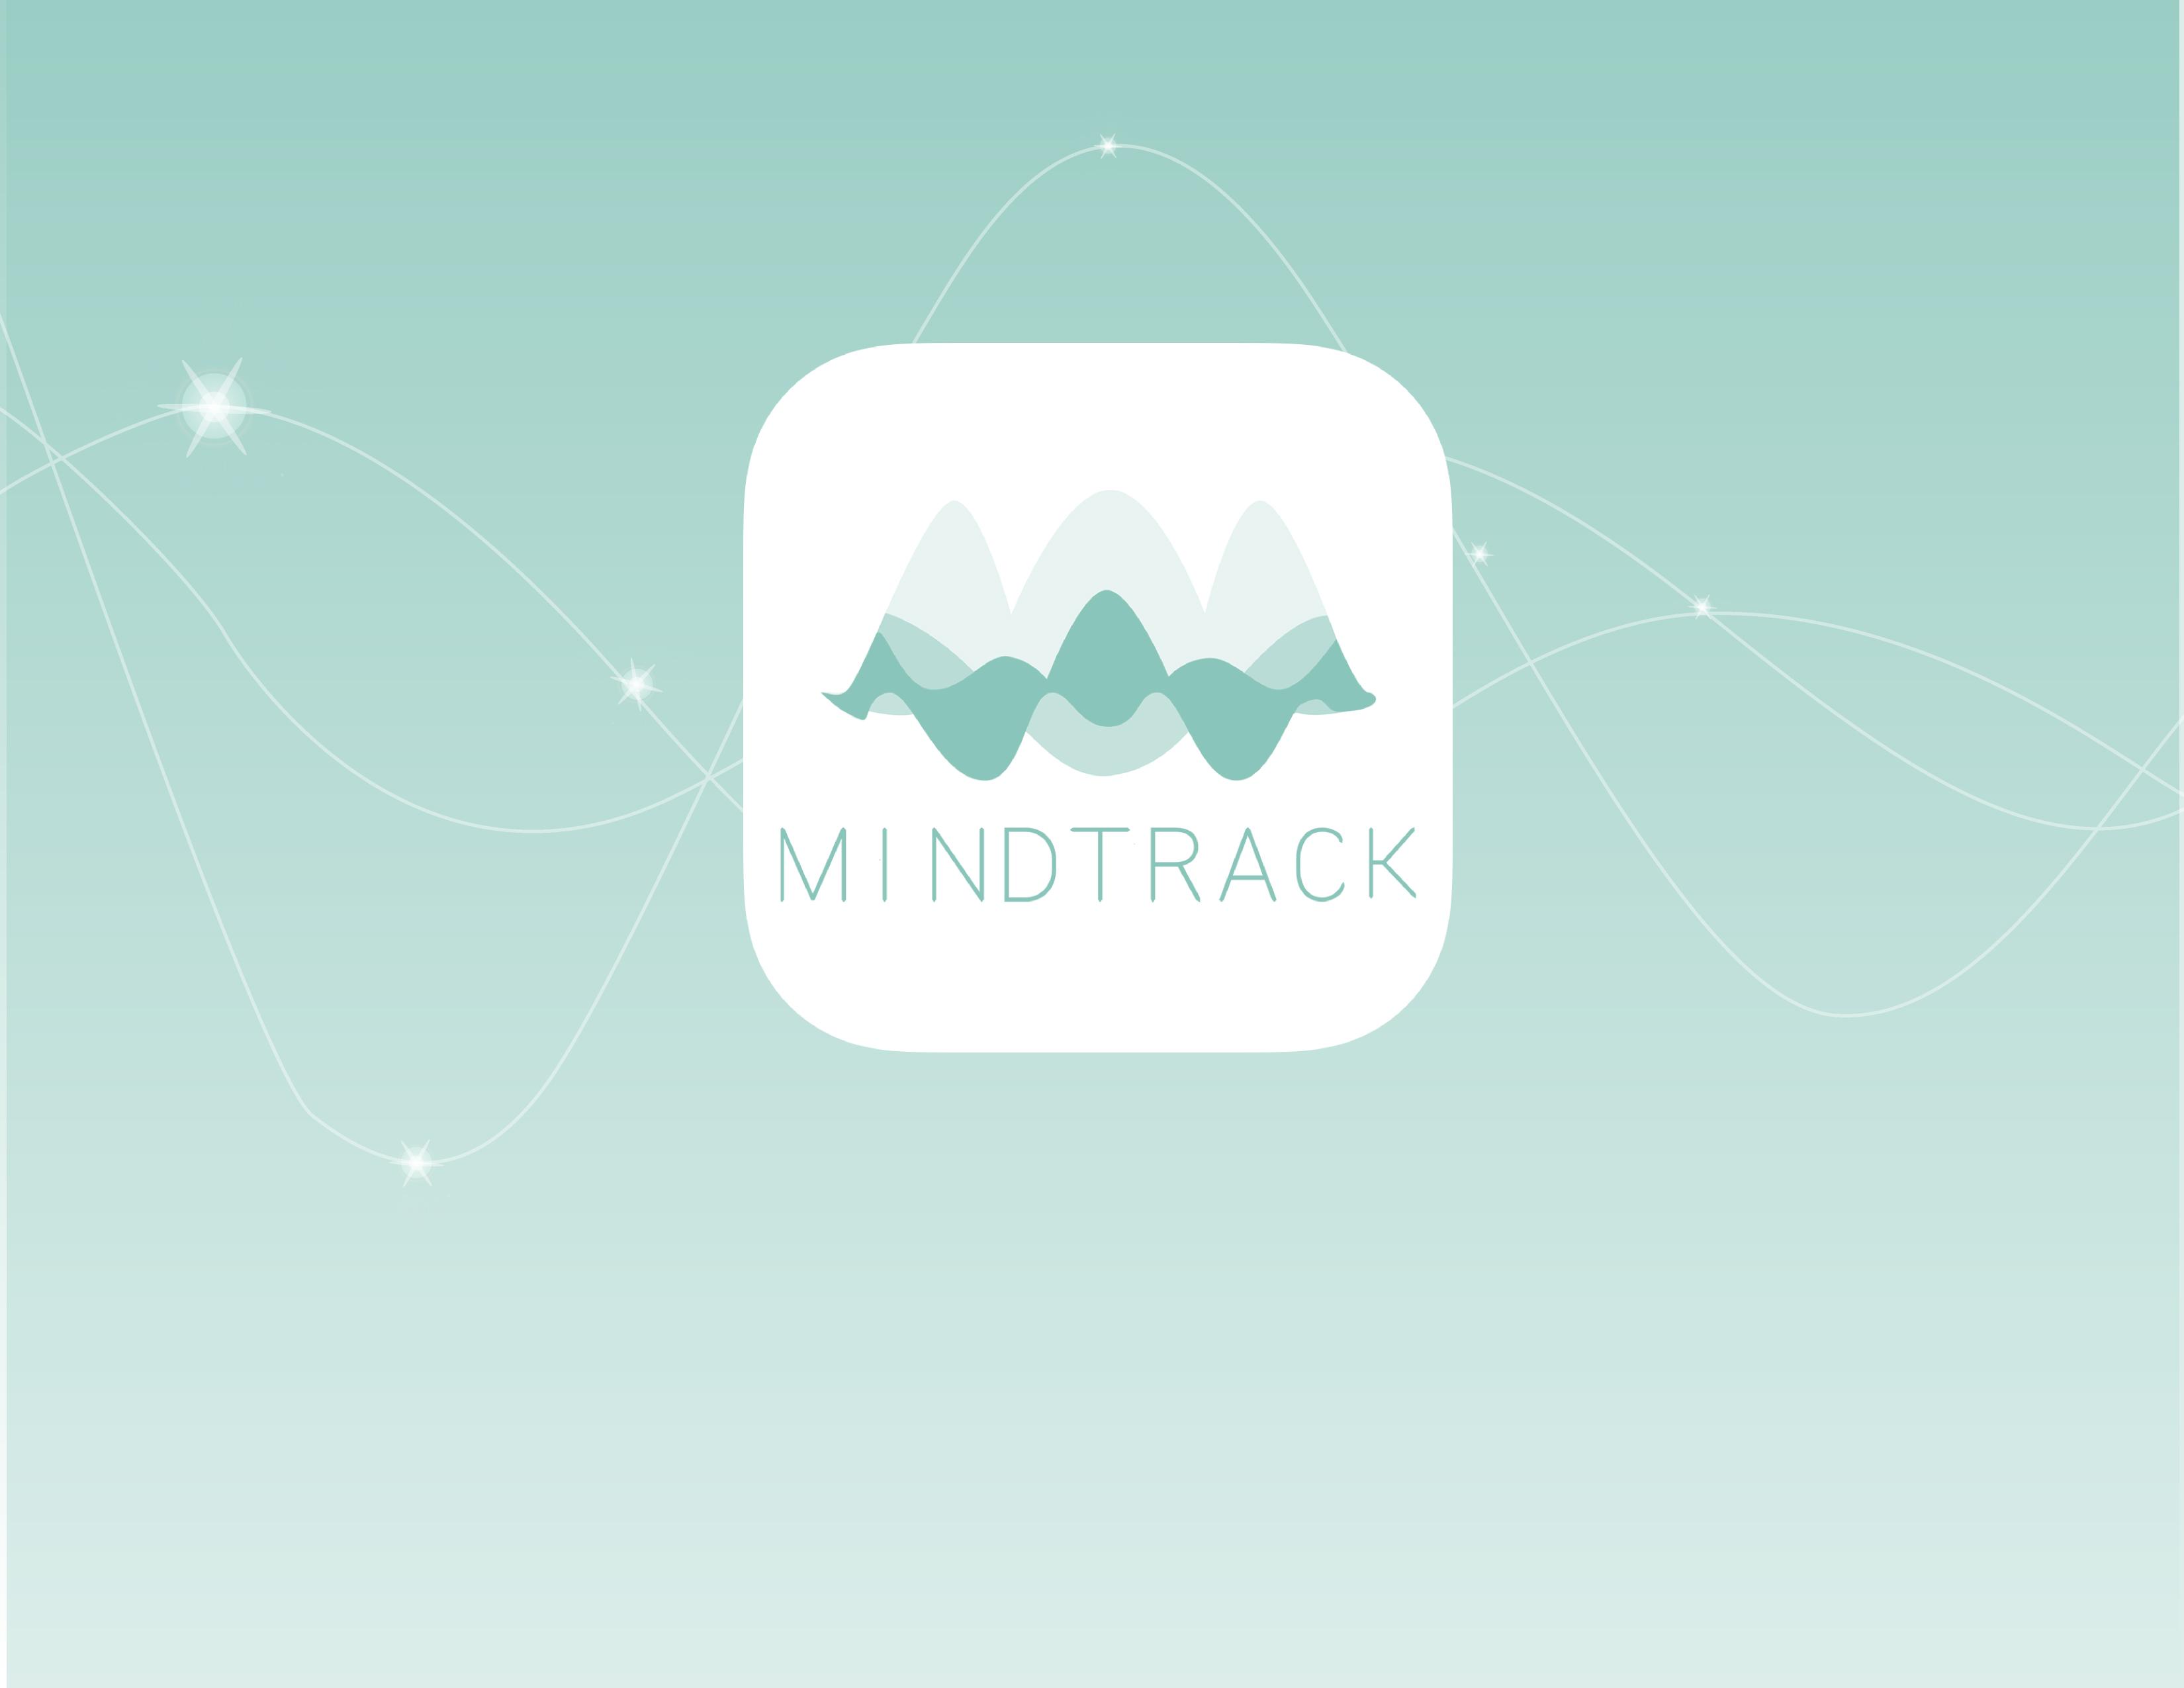 Mindtrack app logo